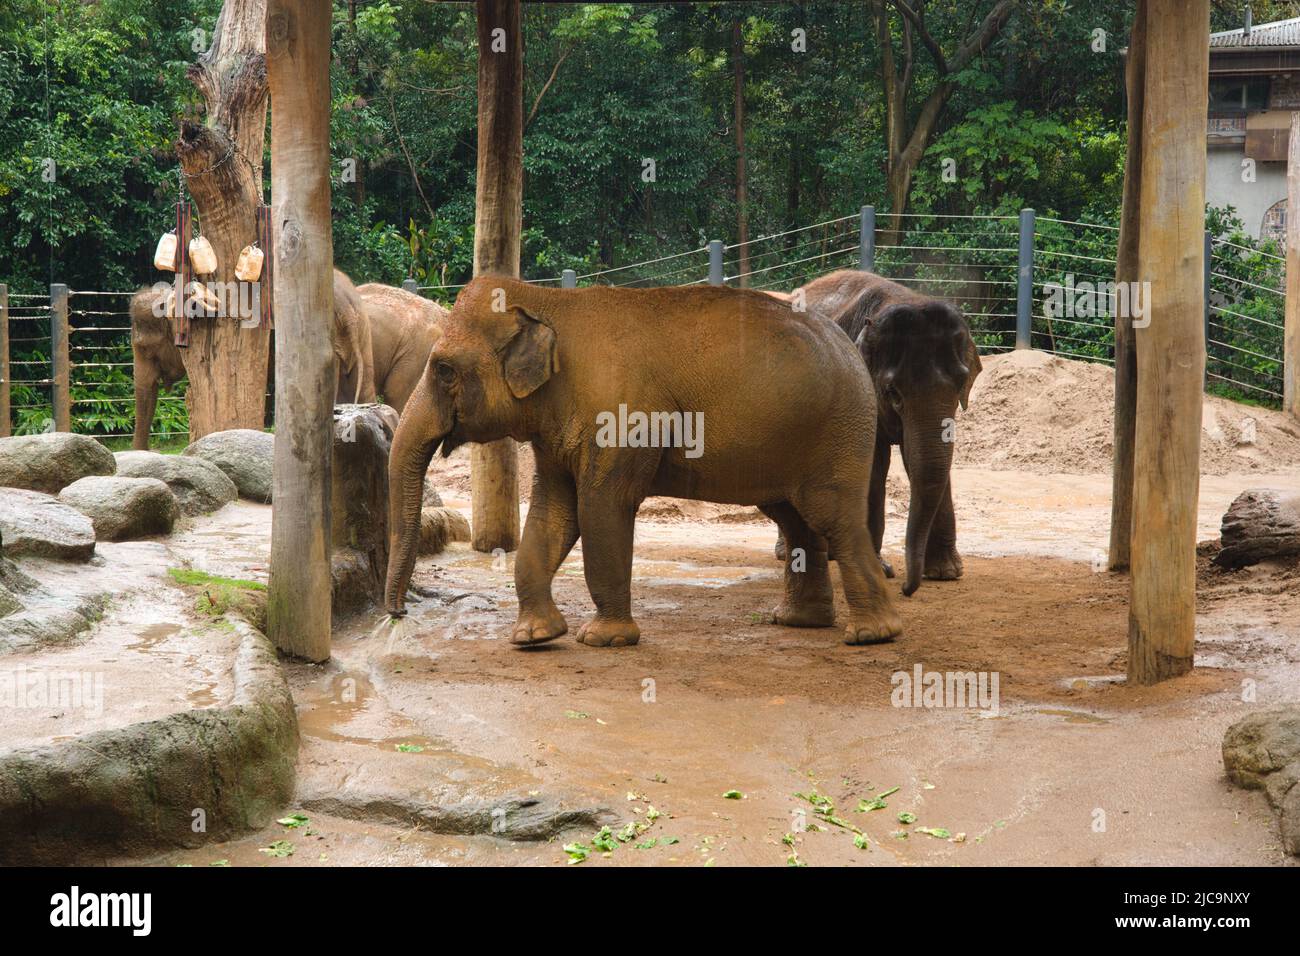 a group of elephants in an Australia zoo Stock Photo